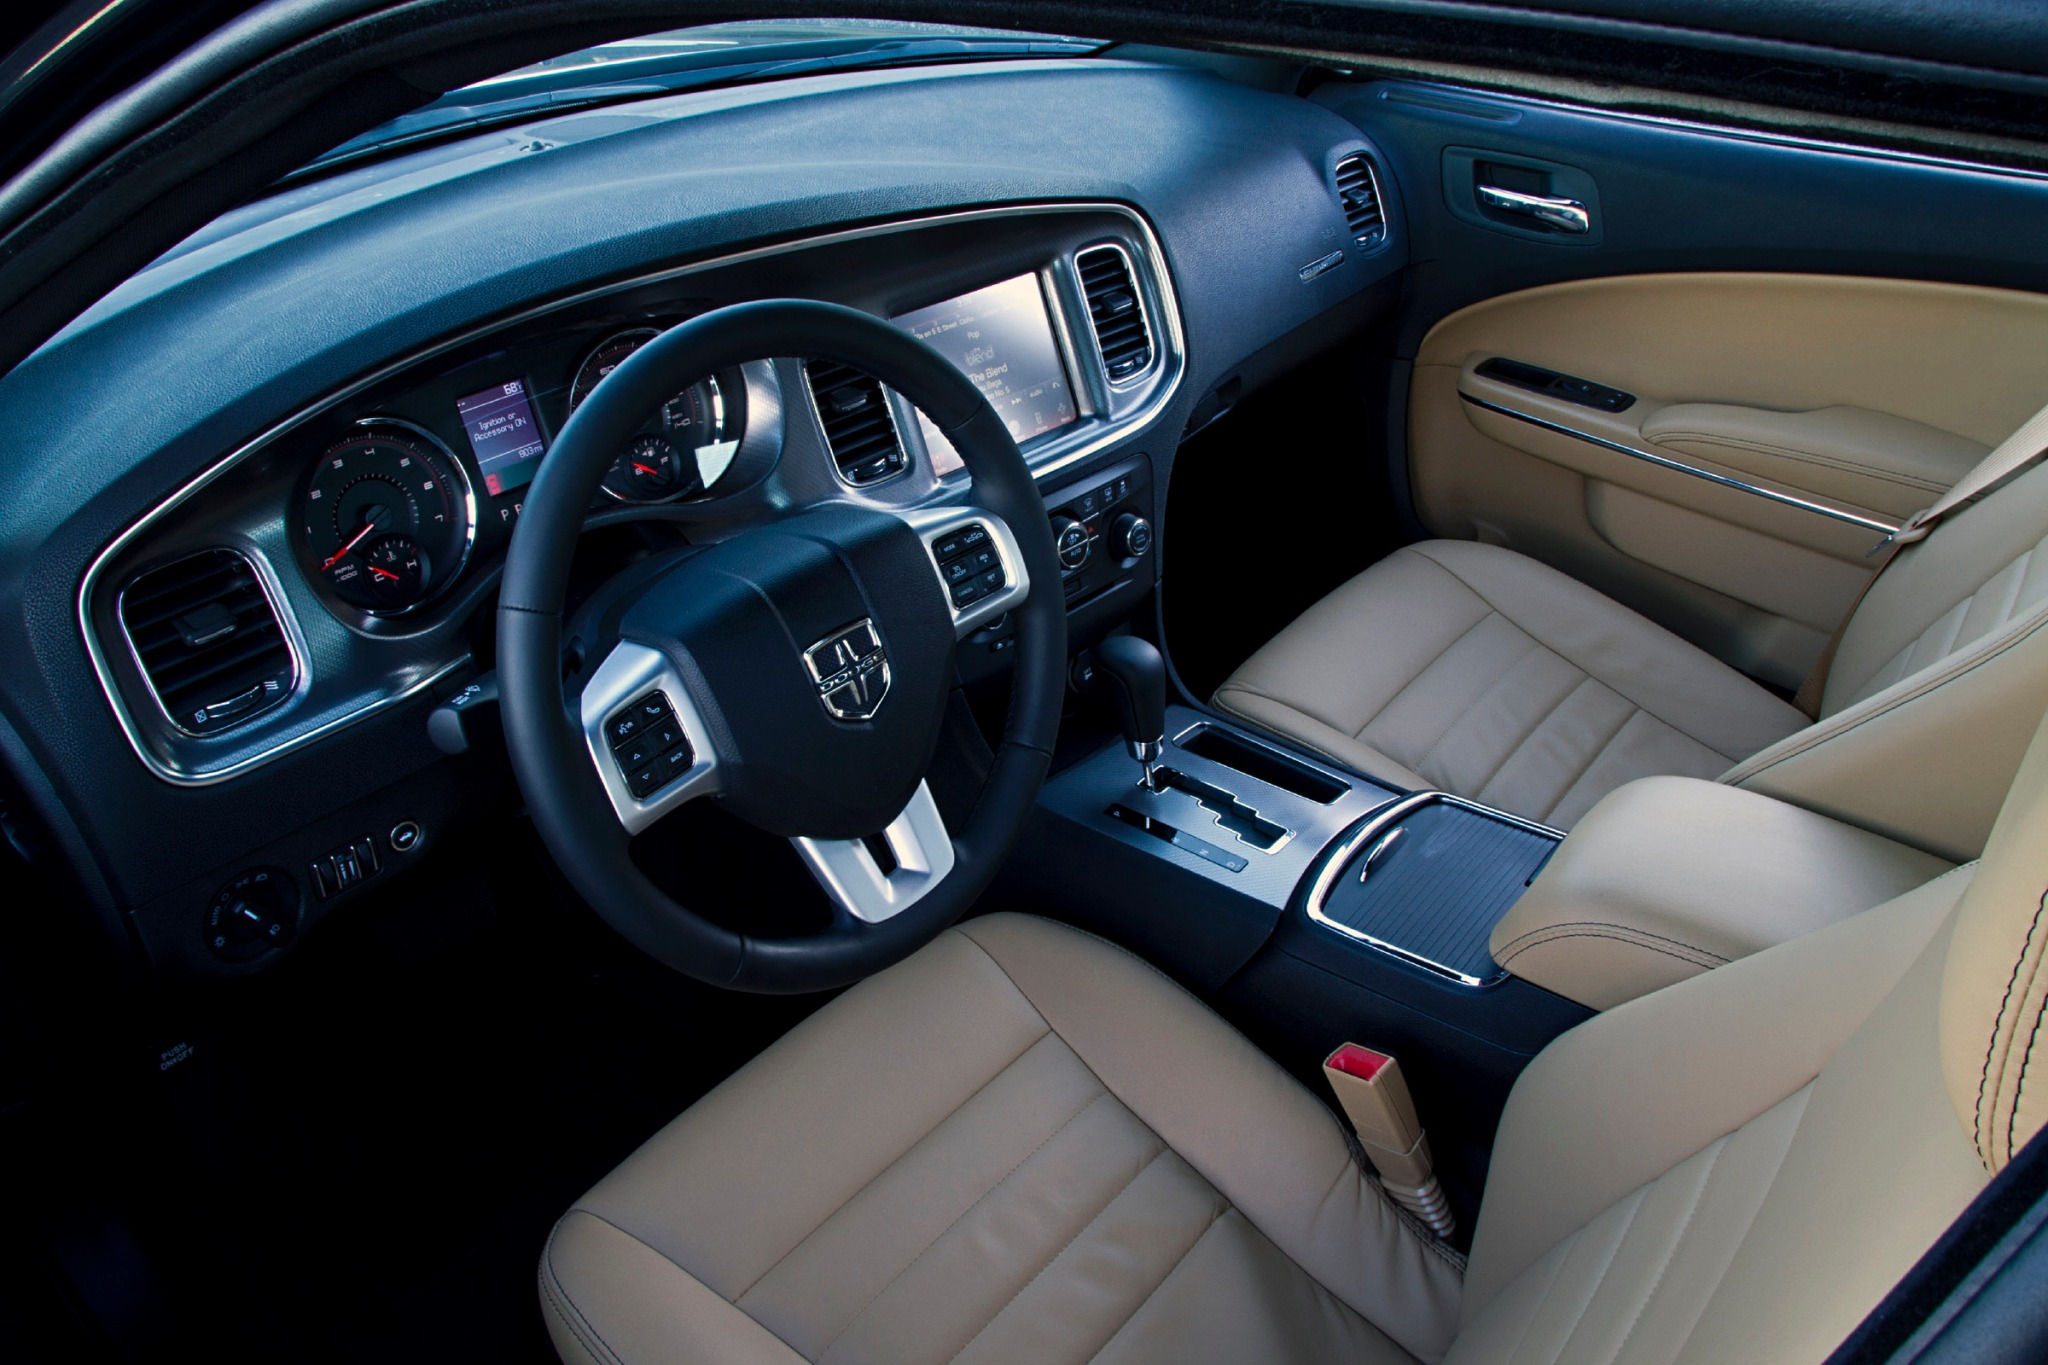 2012 Dodge Charger R/T Sedan Interior